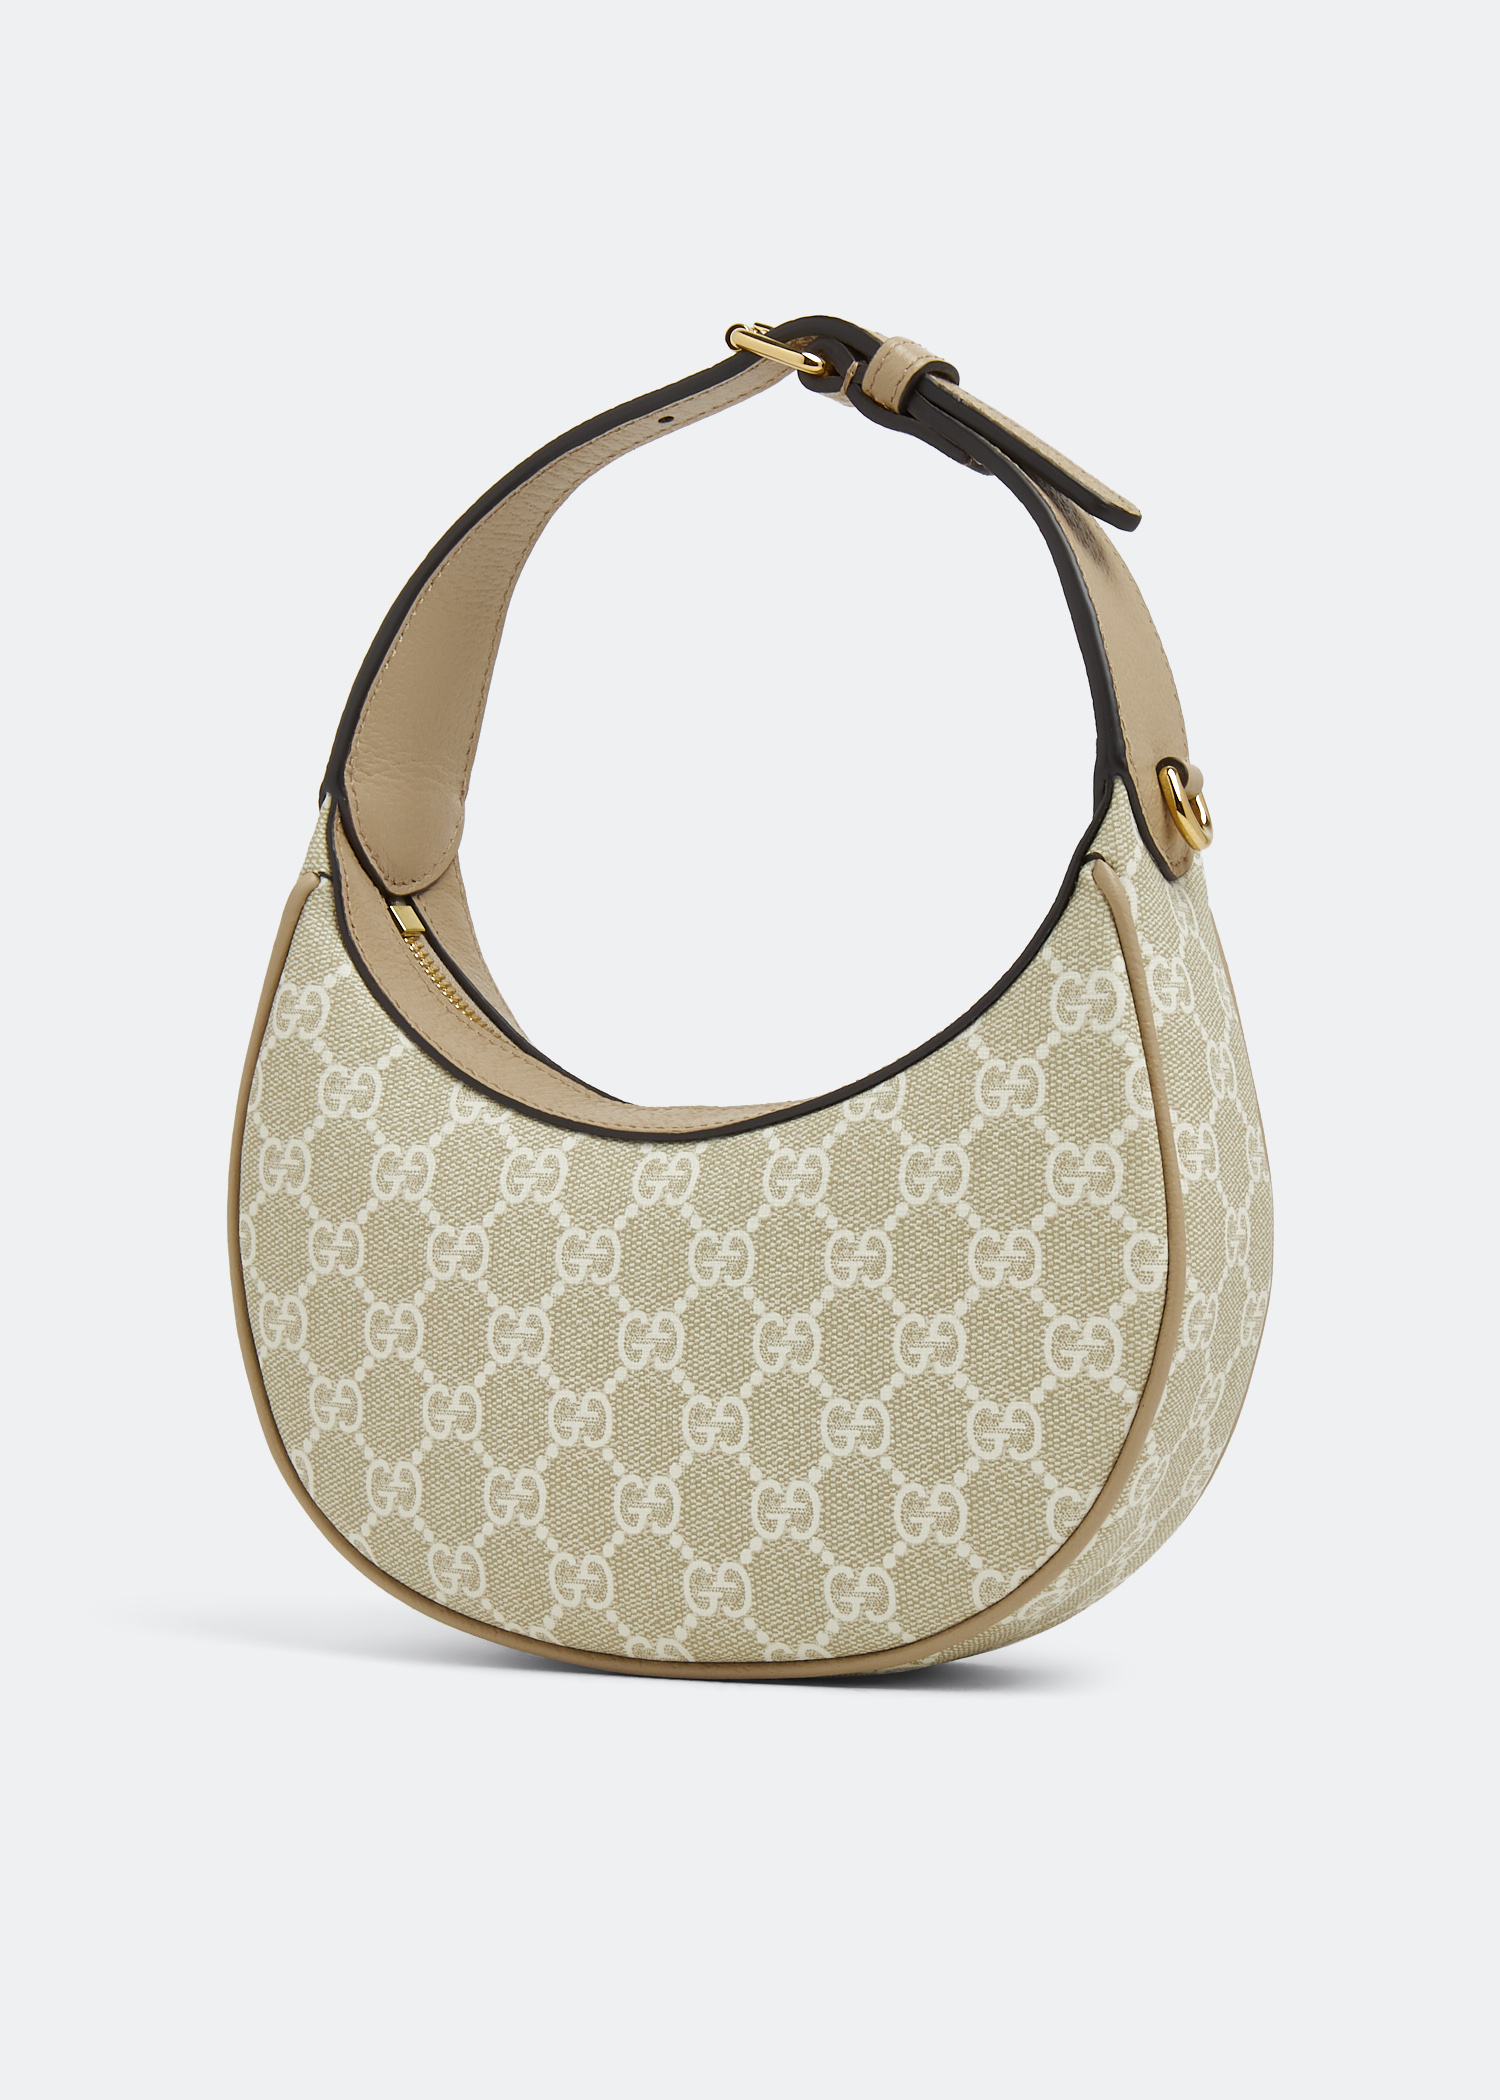 Gucci GG half-moon-shaped mini bag for Women - Beige in Bahrain